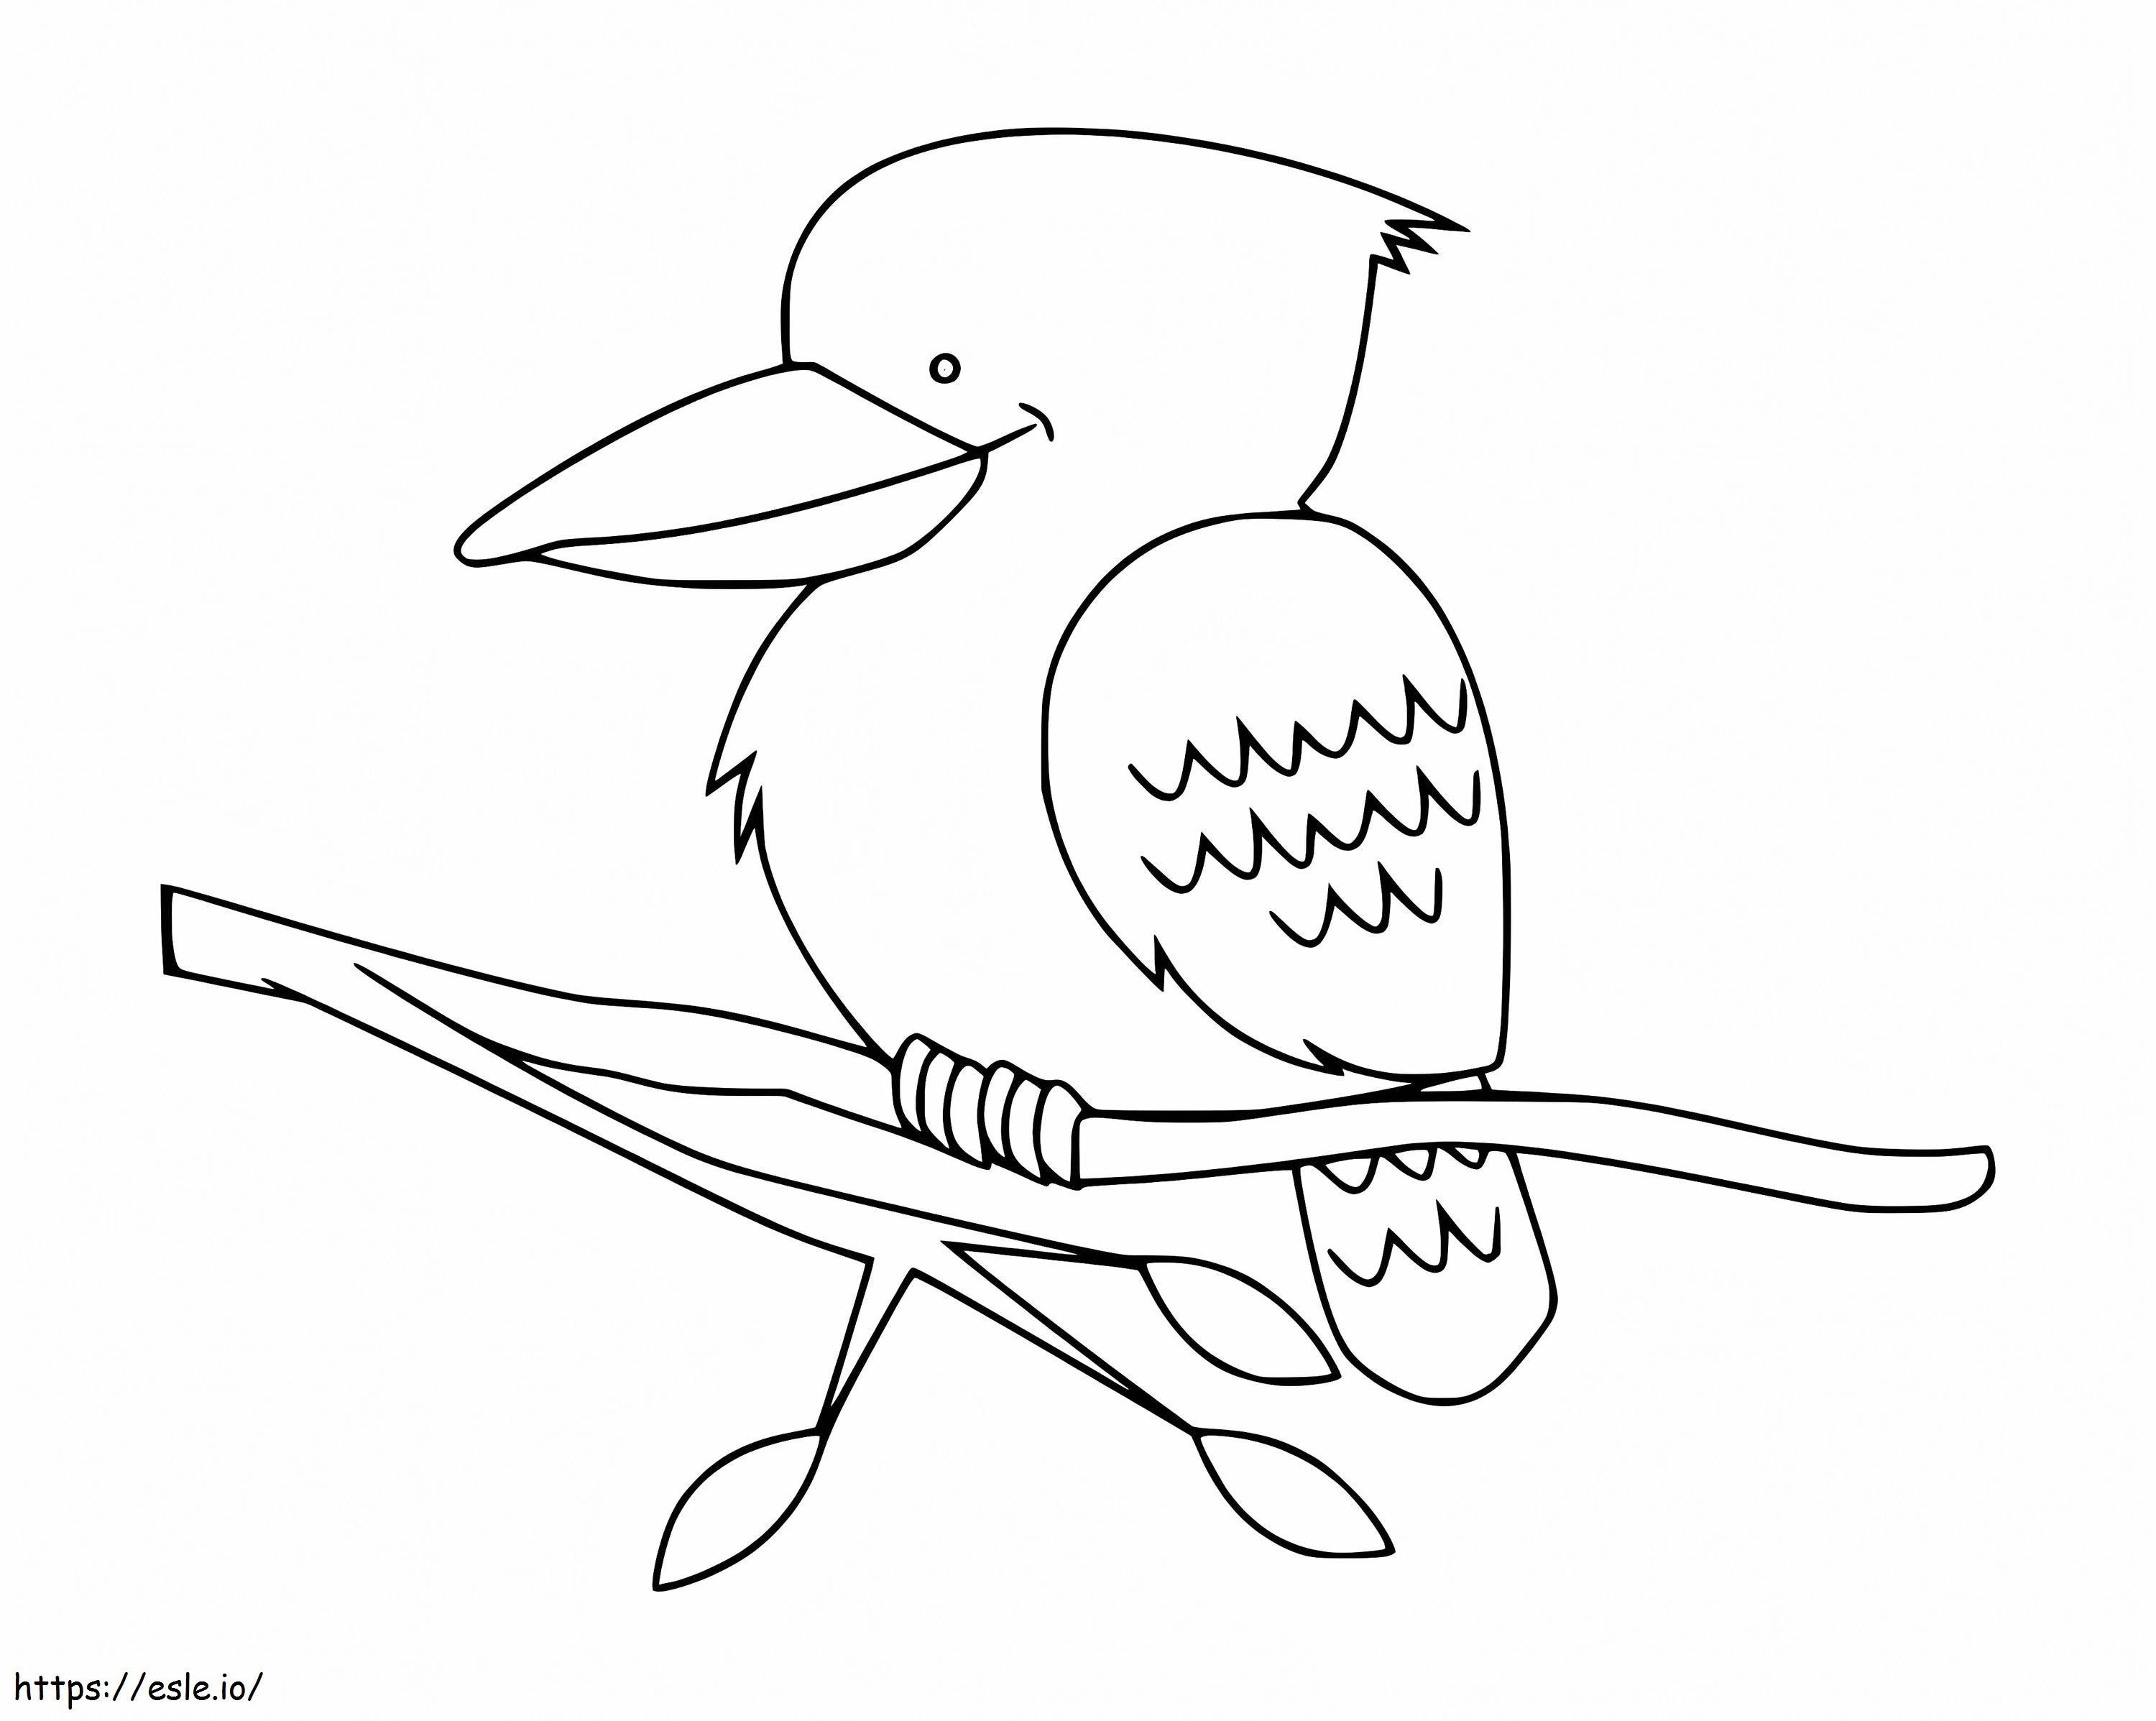 Komik Kookaburra boyama